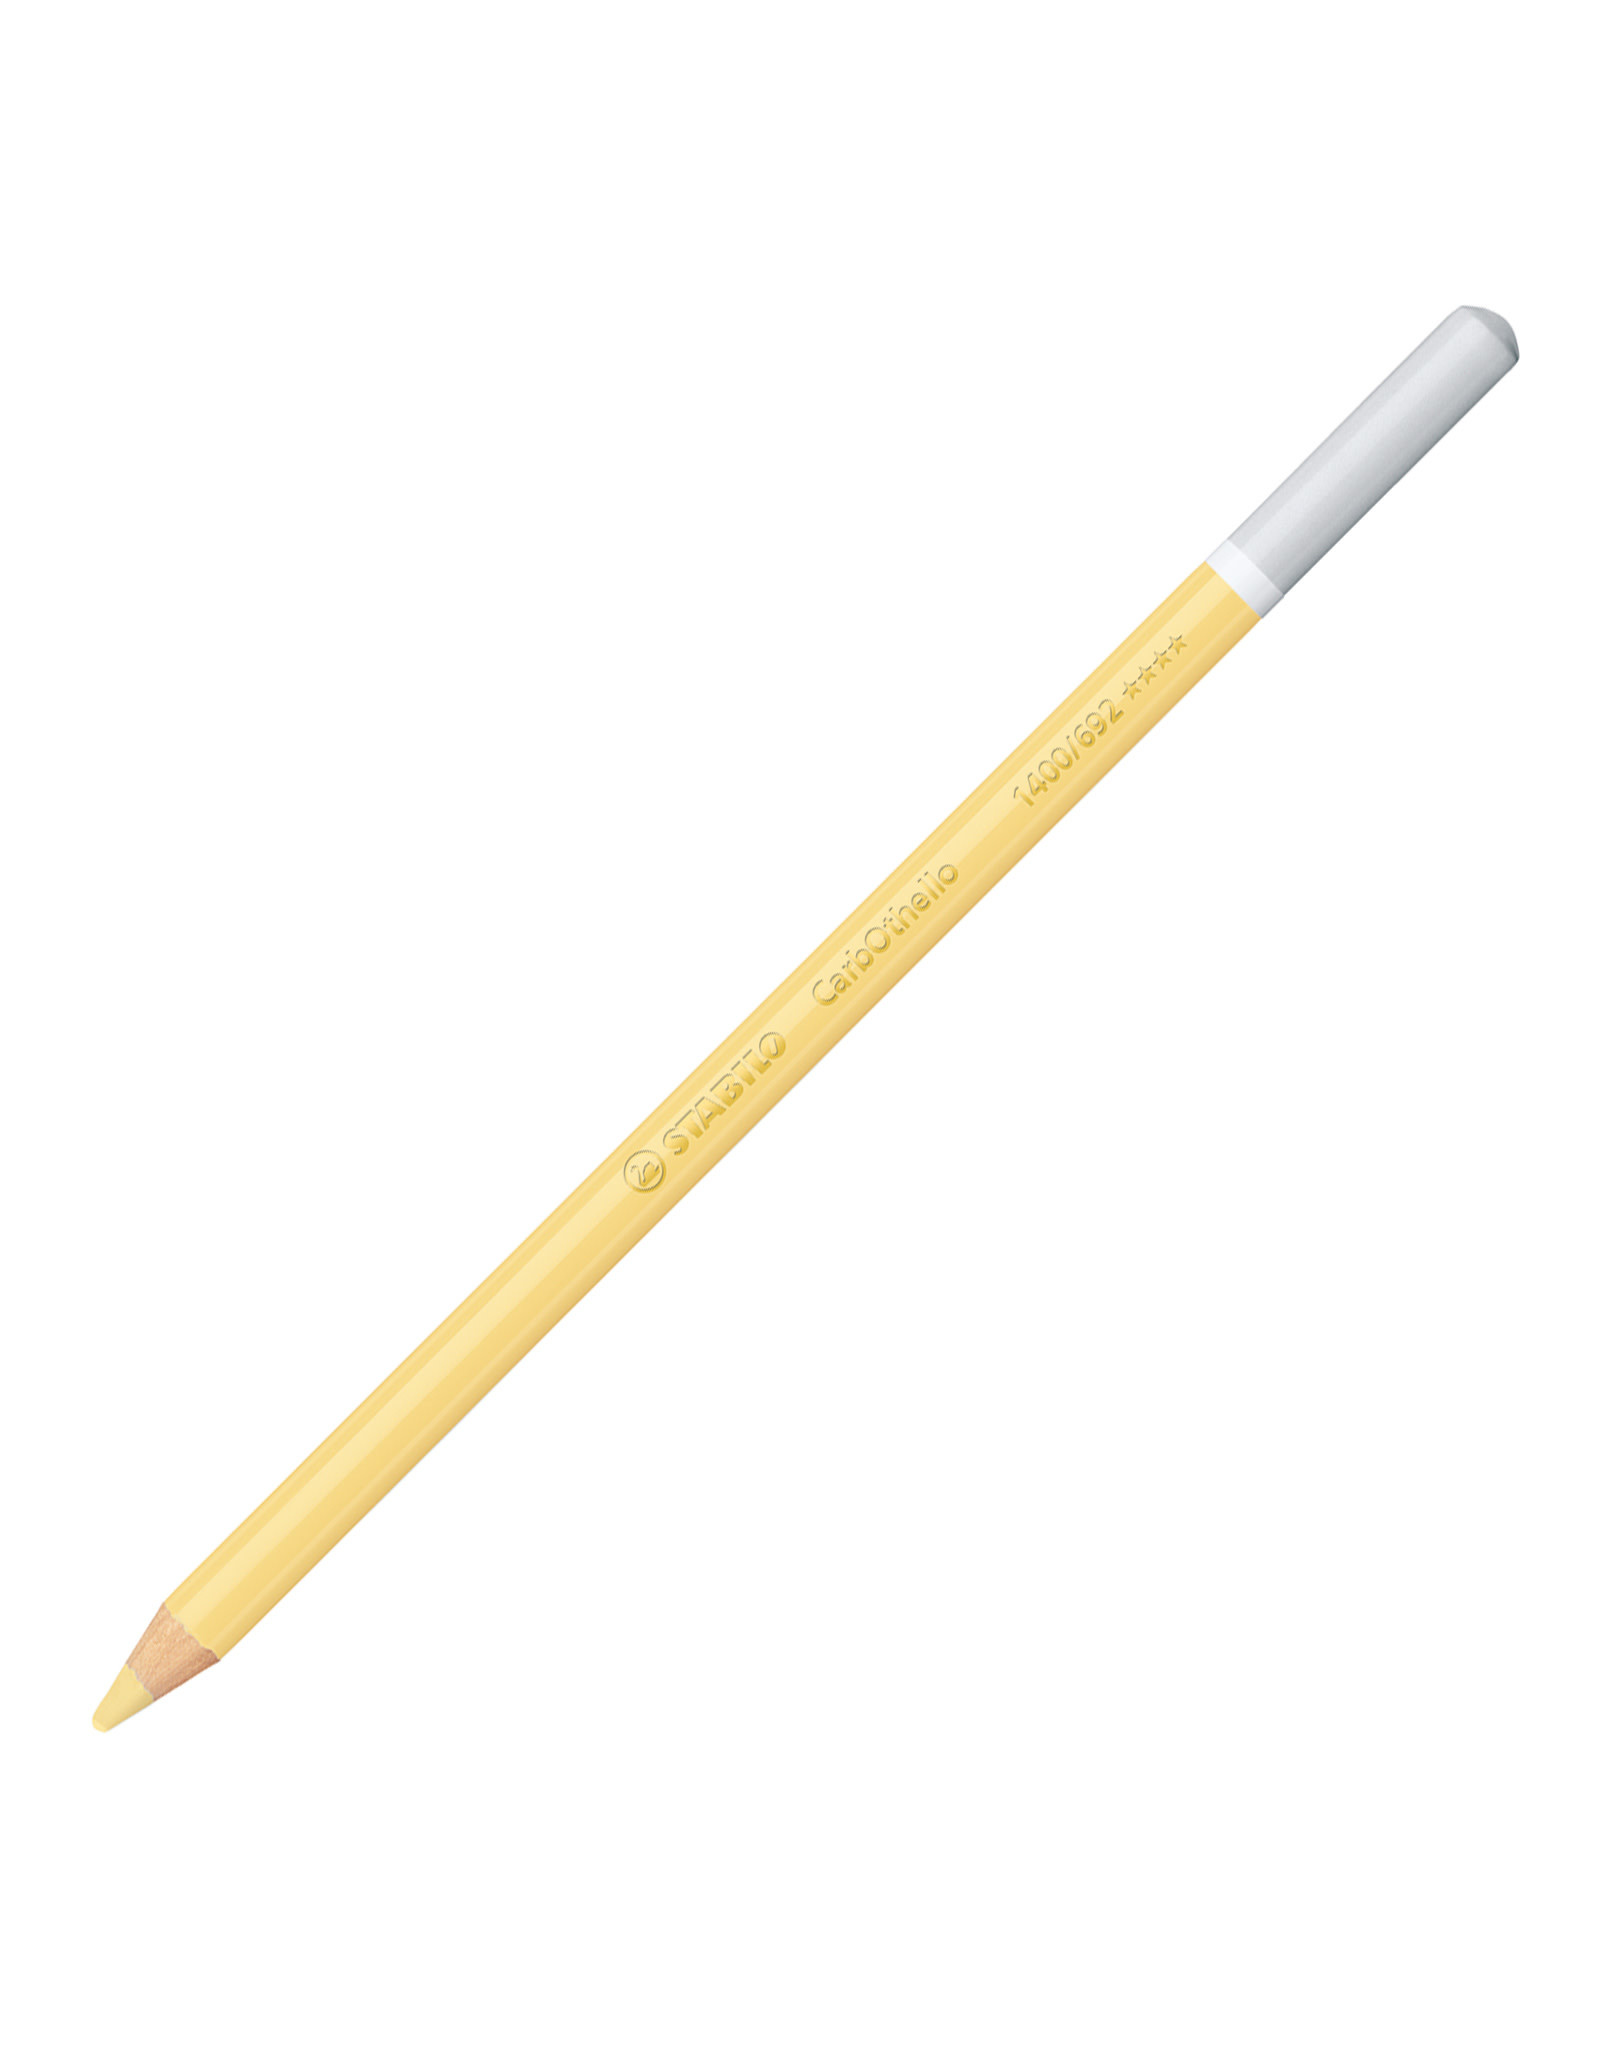 STABILO Stabilo Carbothello Pastel Pencil, Golden Ochre Light